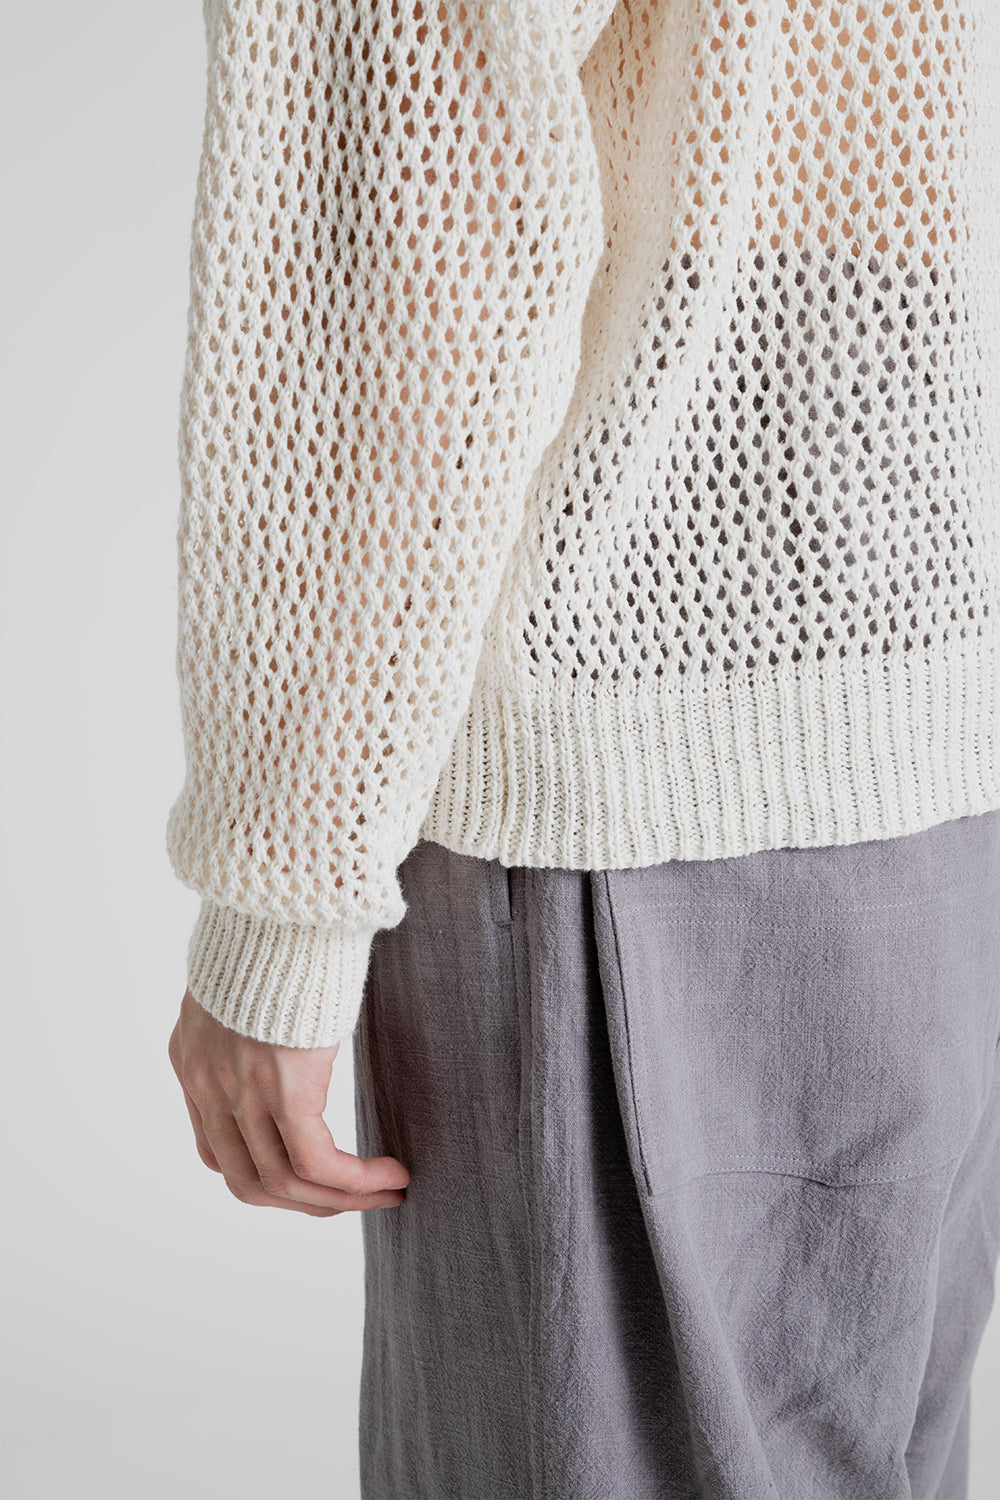 Open Knit Sweater - Natural Linen / Cotton